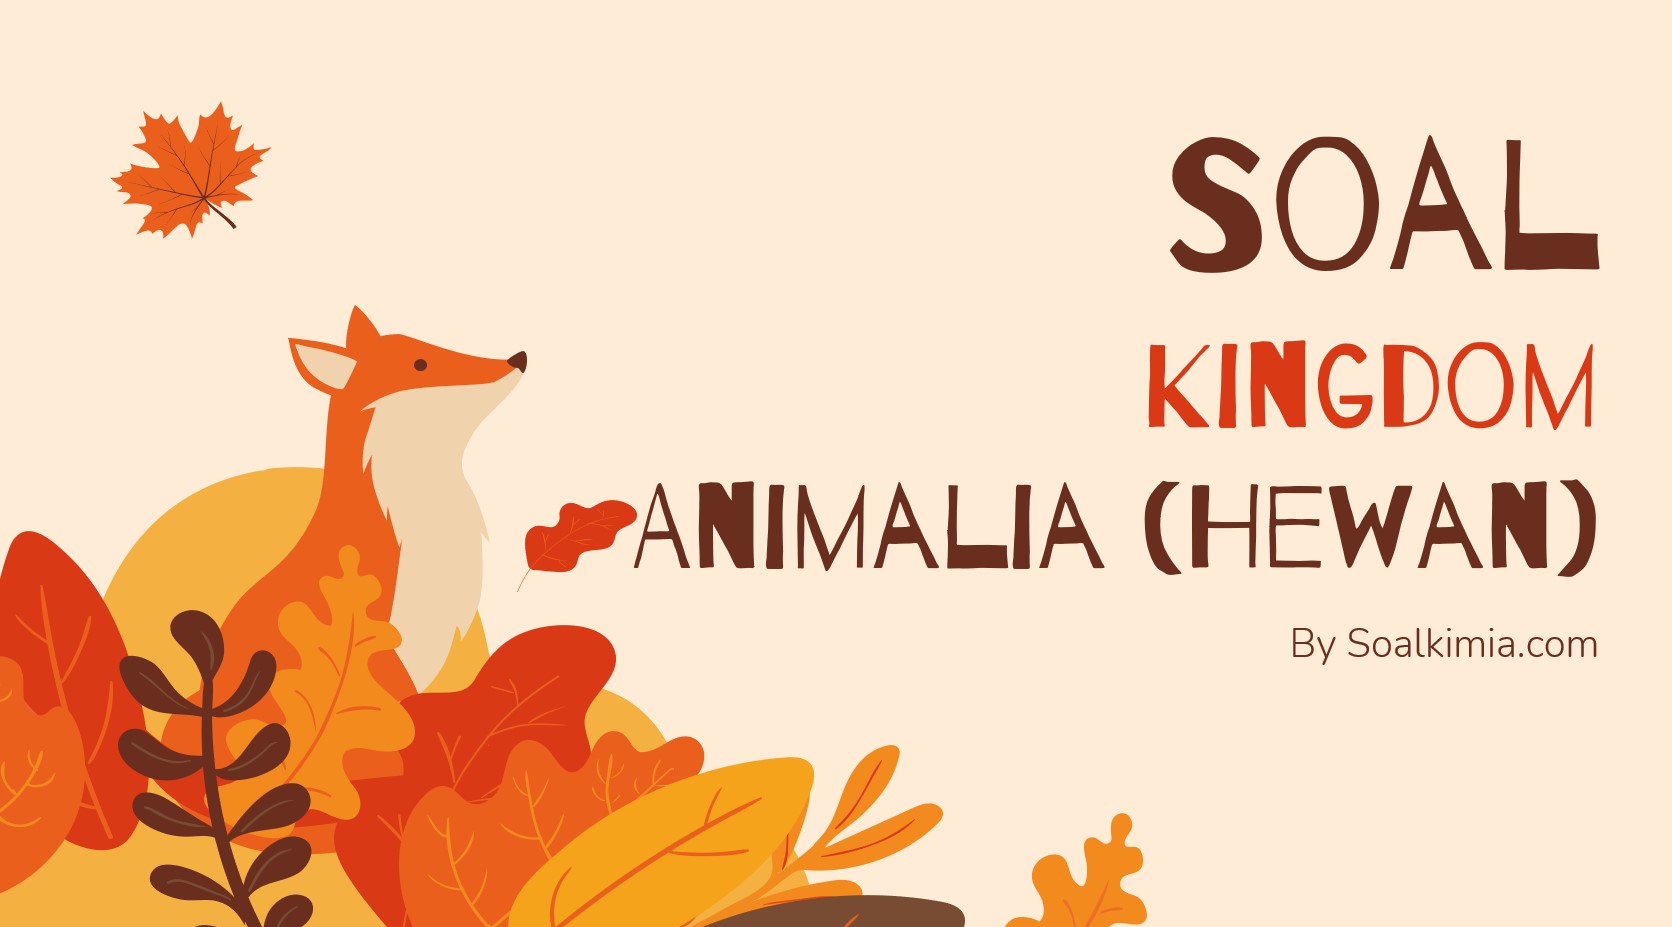 Soal Kingdom Animalia (Hewan)